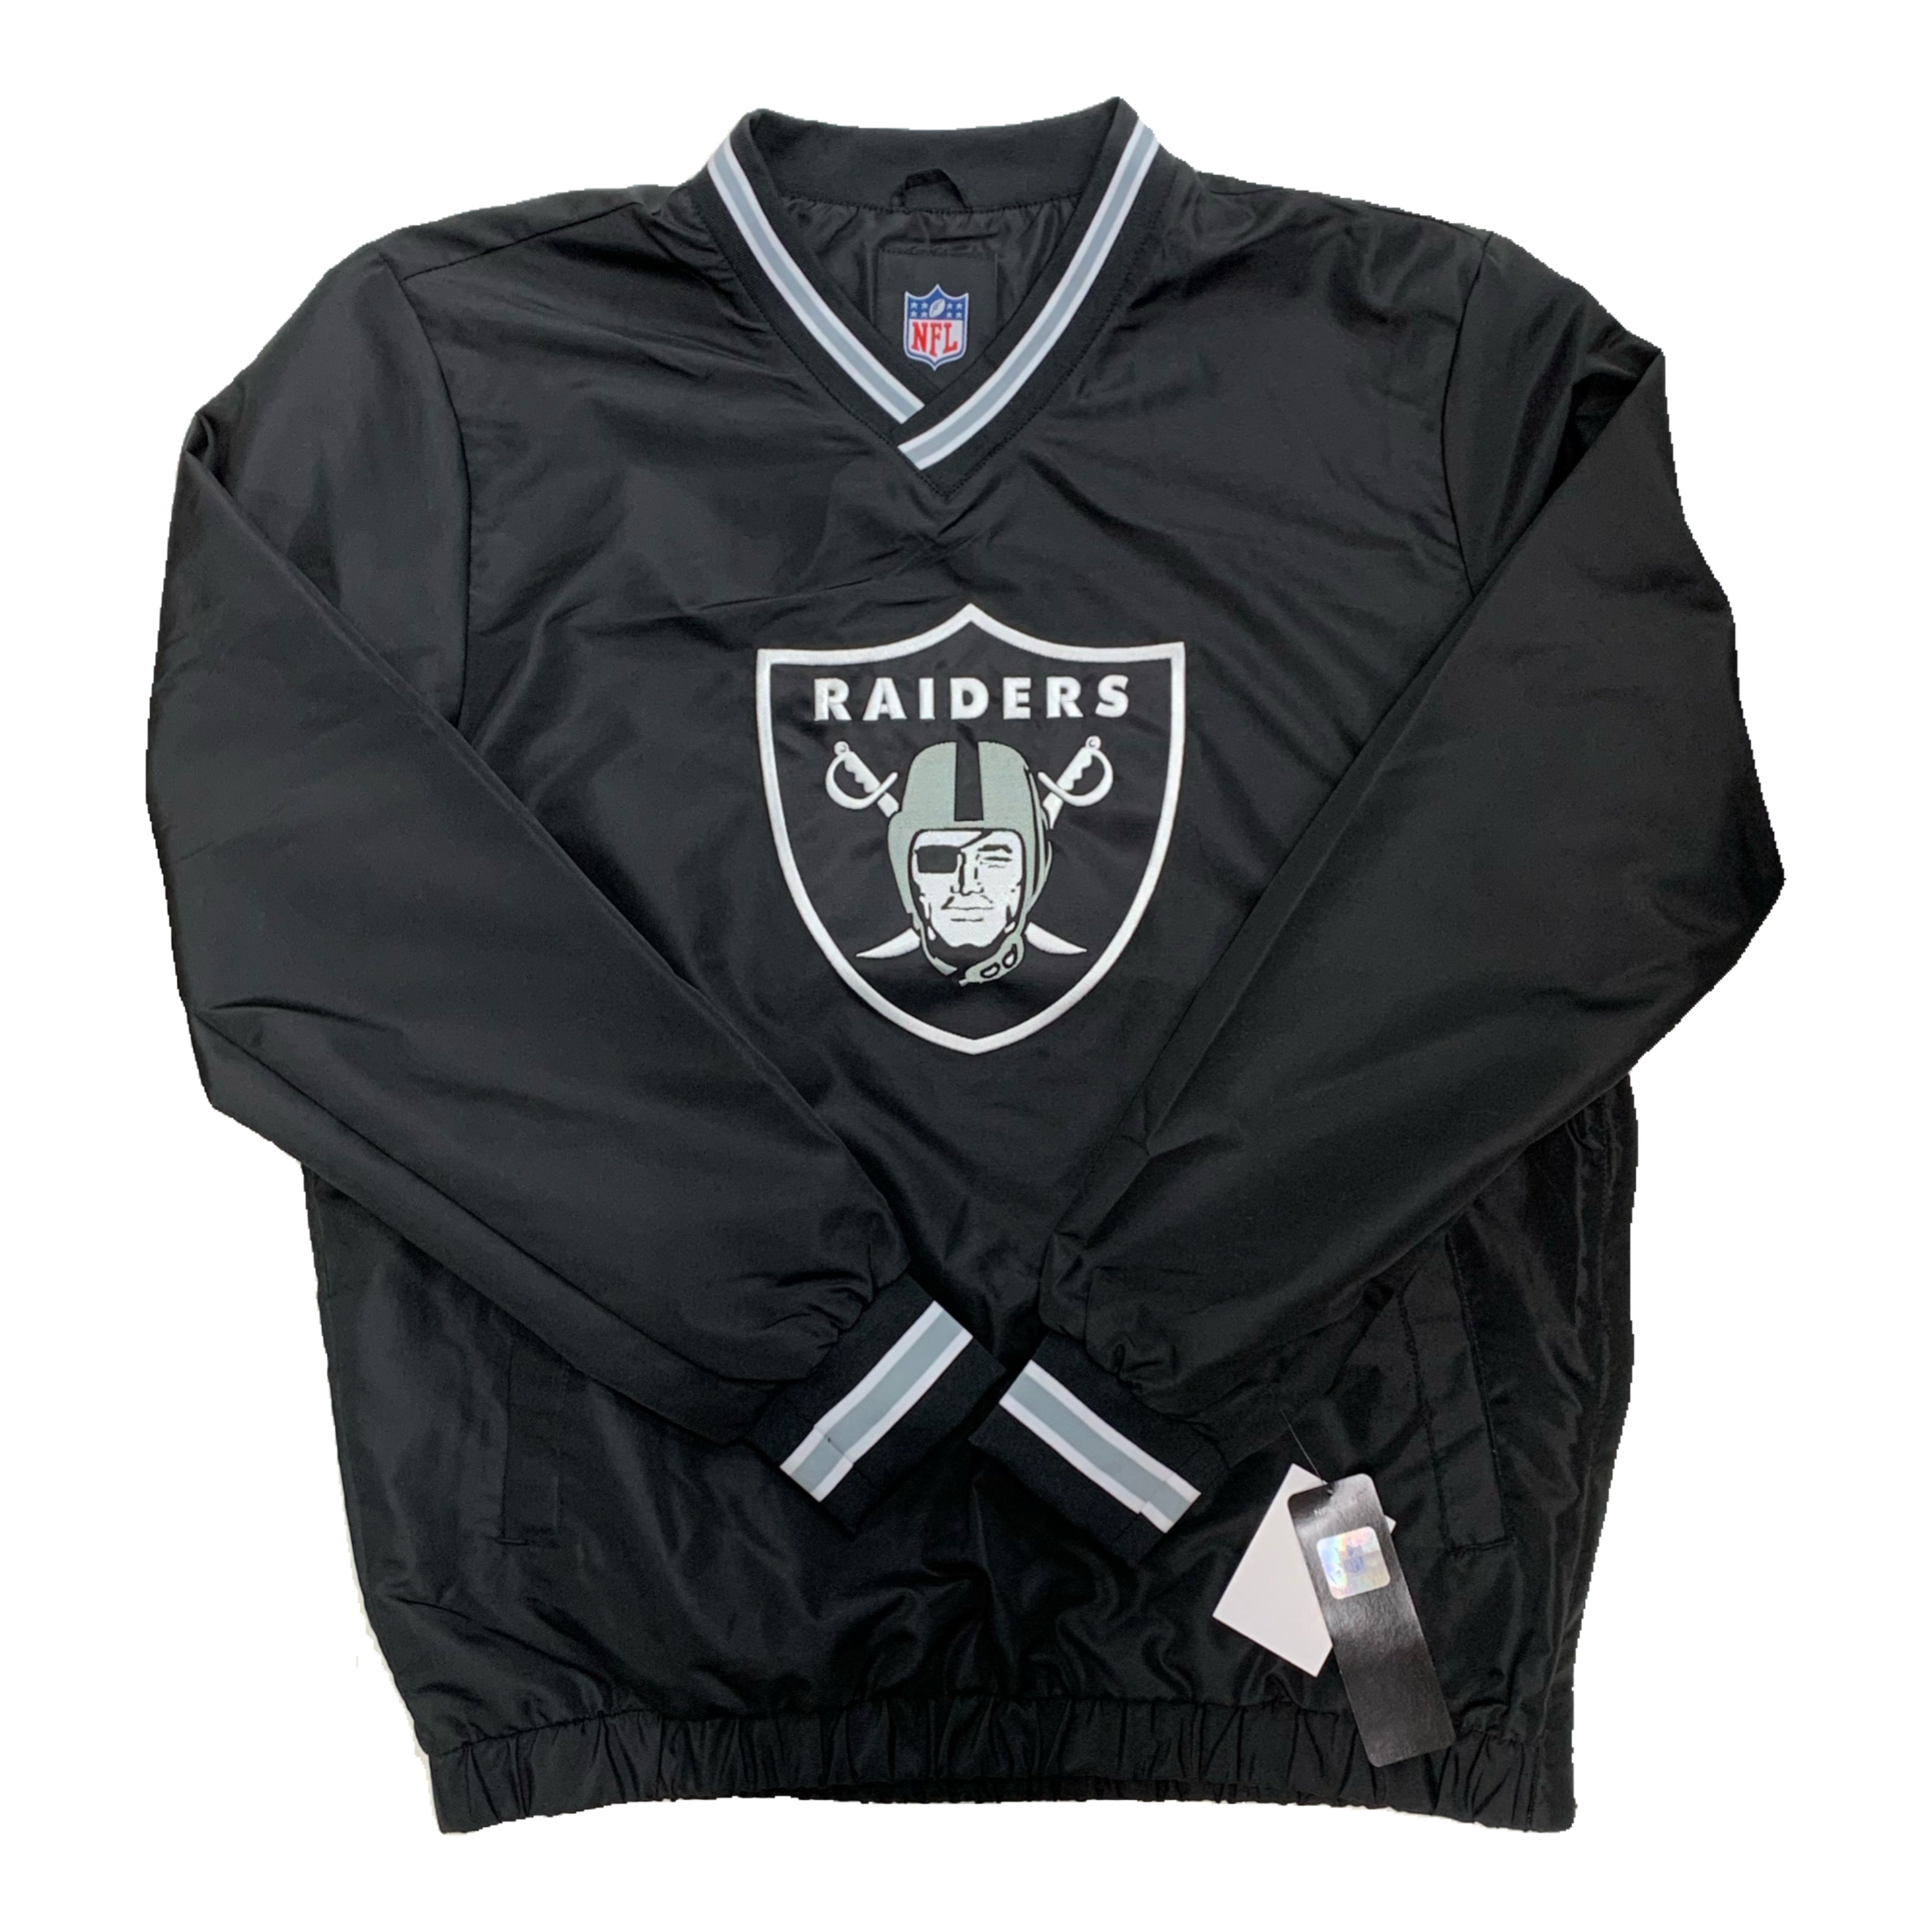 Cheap Las Vegas Raiders Apparel, Discount Raiders Gear, NFL Raiders  Merchandise On Sale